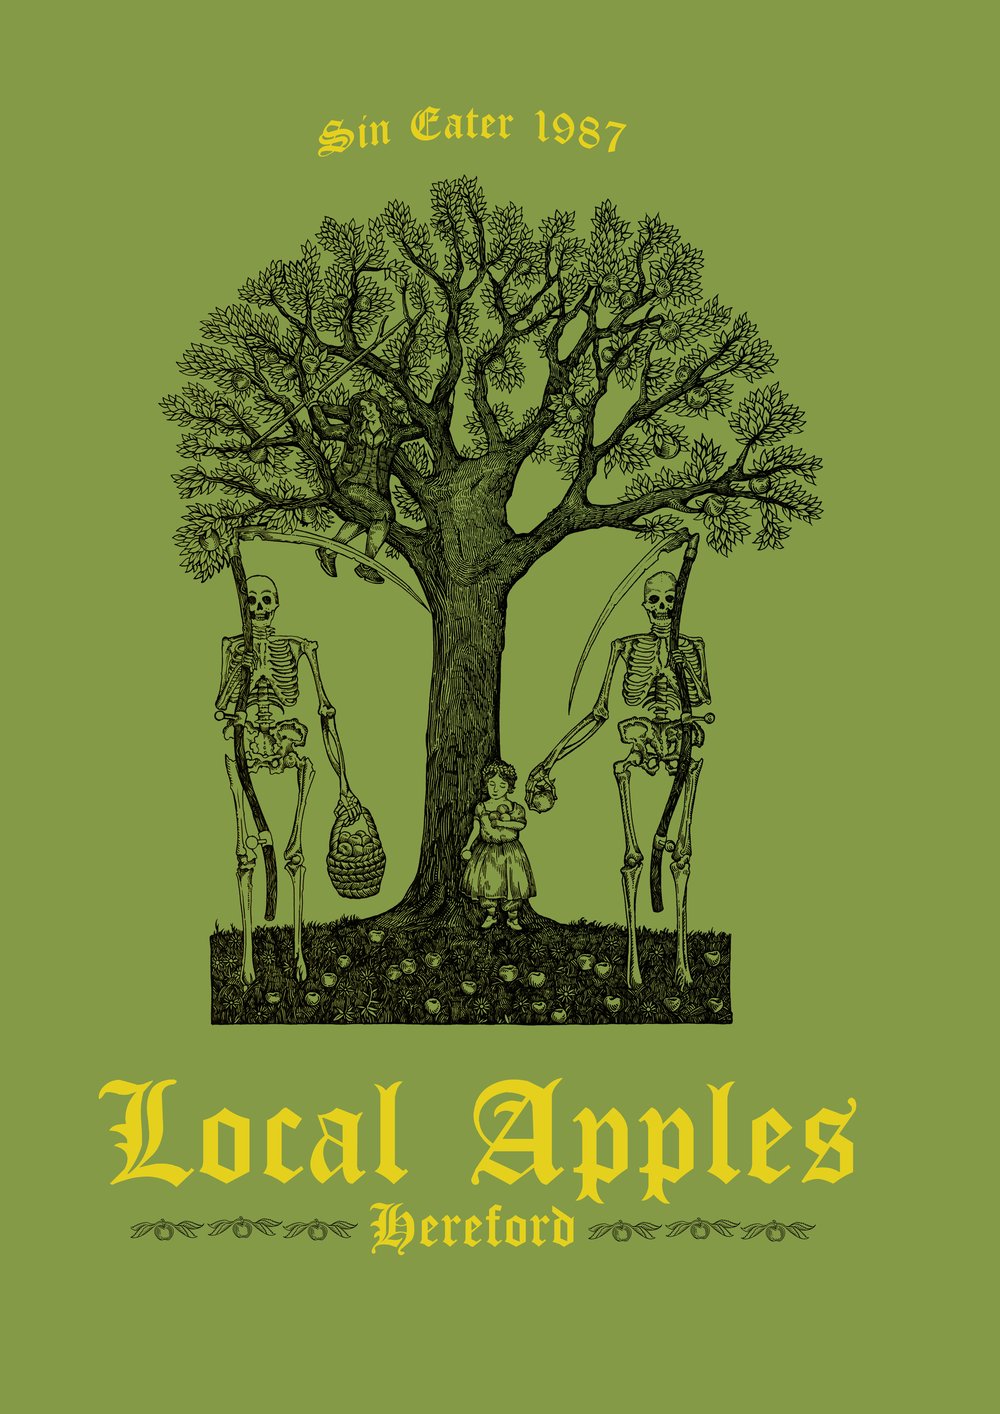 Local apple t shirts